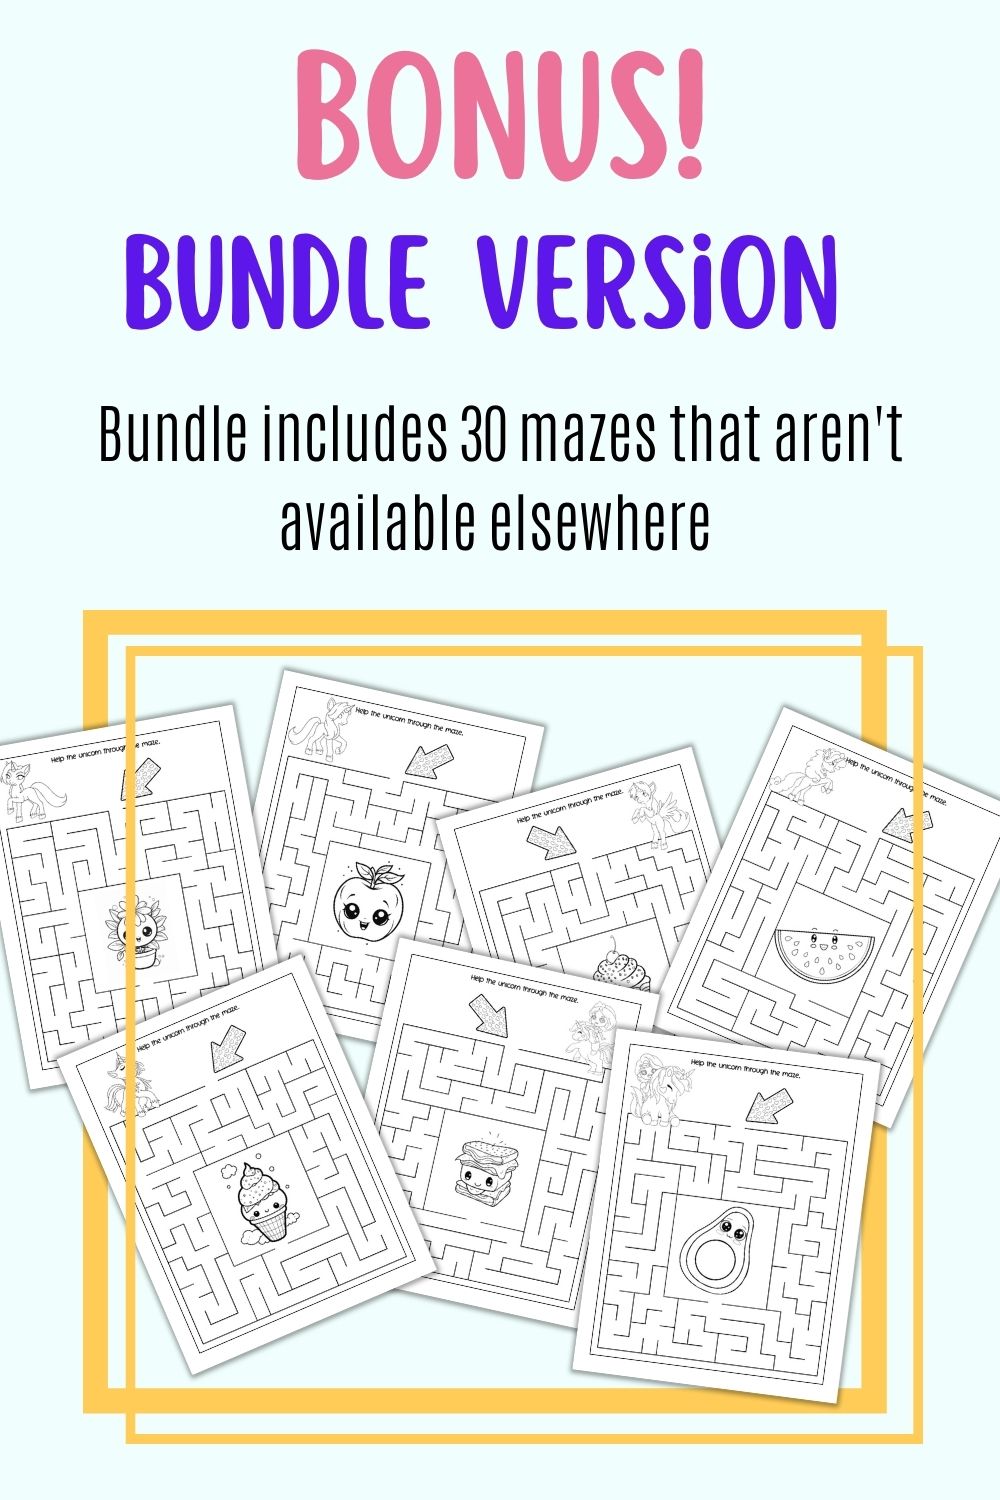 Text "bonus bundle version! Bundle includes 30 mazes that aren't available elsewhere" with a preview of 7 mazes